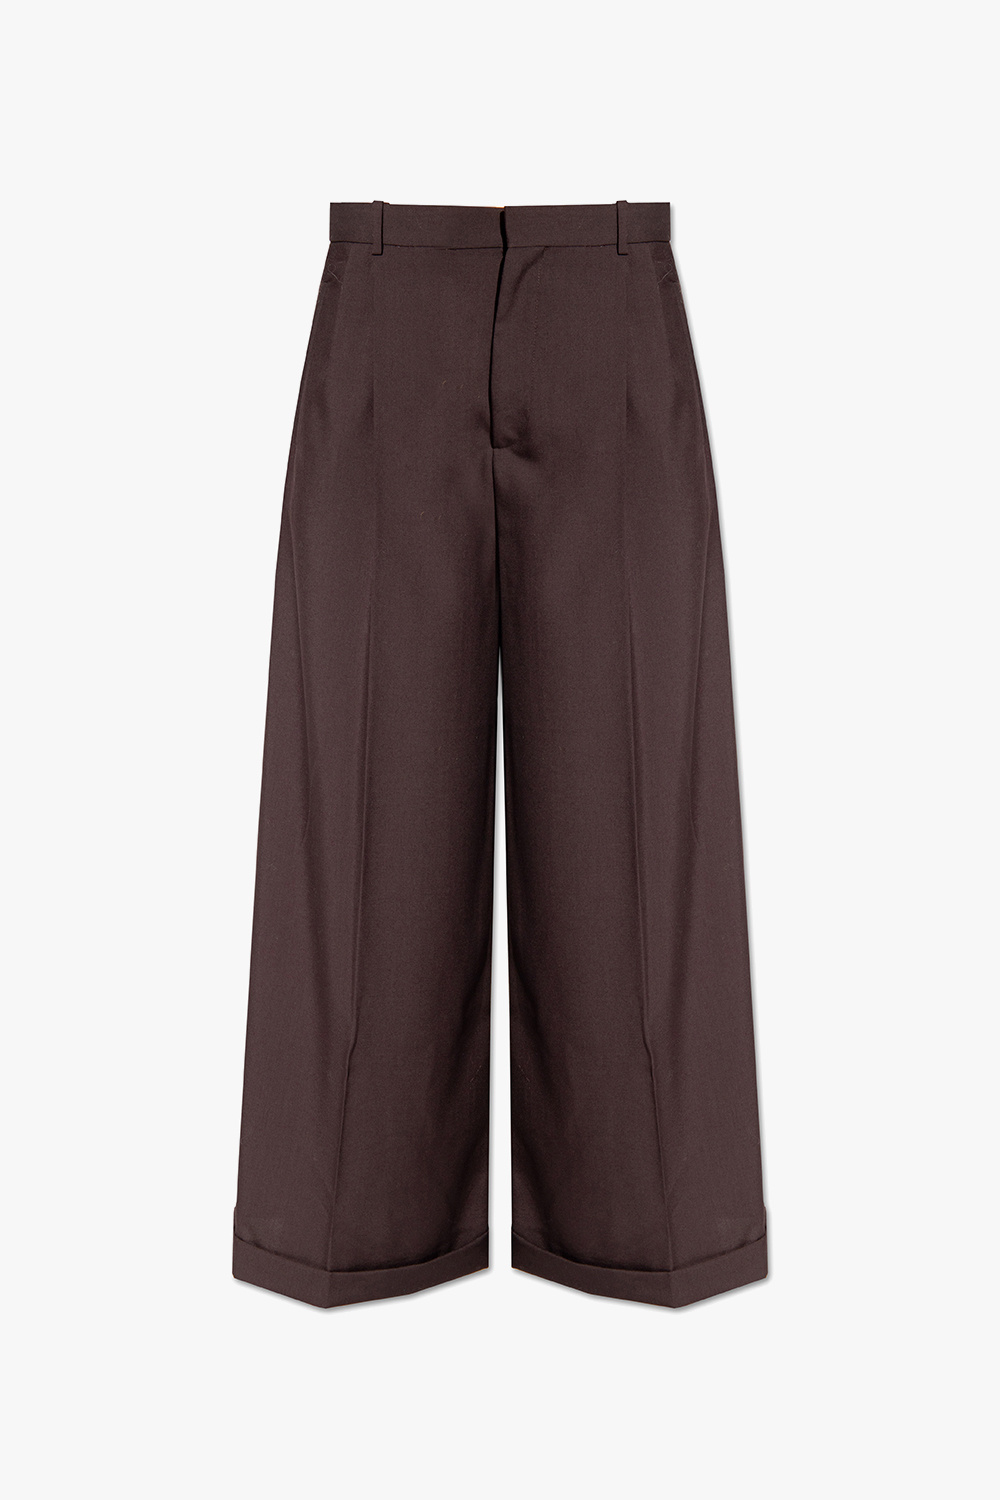 Marni Wool pleat-front Ref trousers